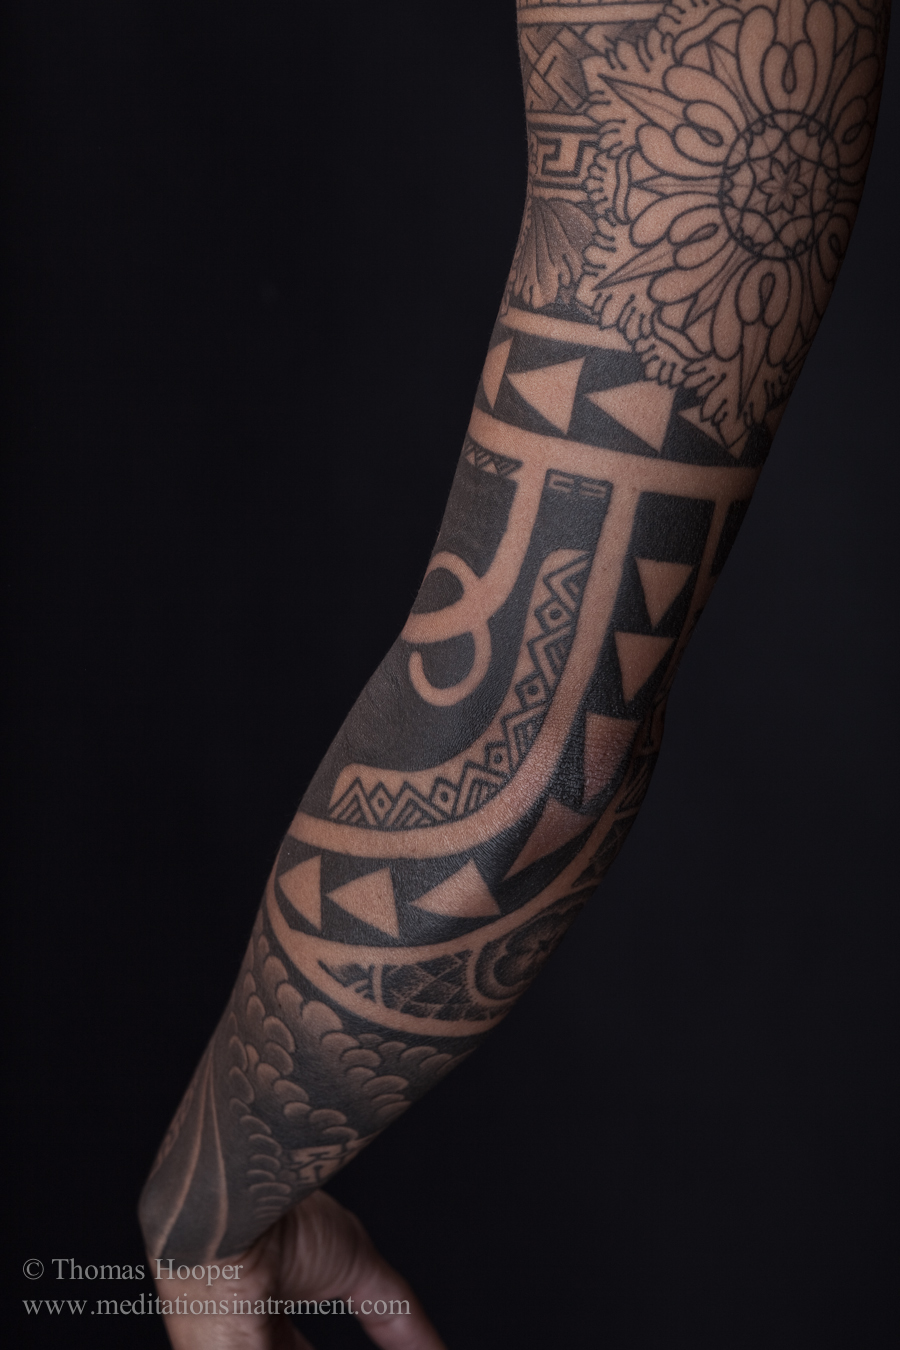 Some More Tribal Tattoos